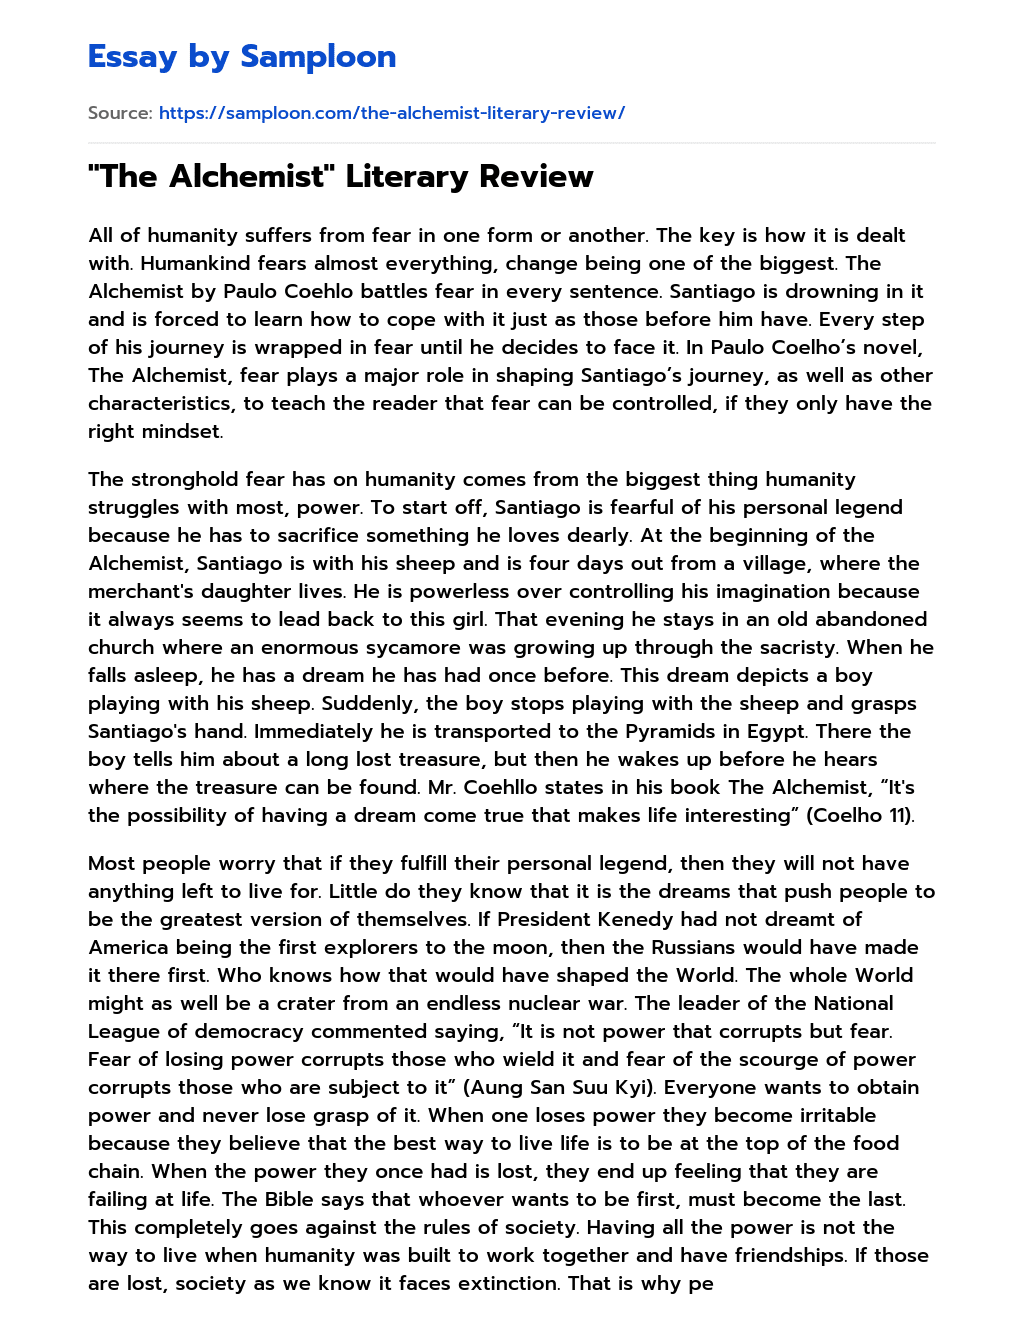 “The Alchemist” Literary Review essay